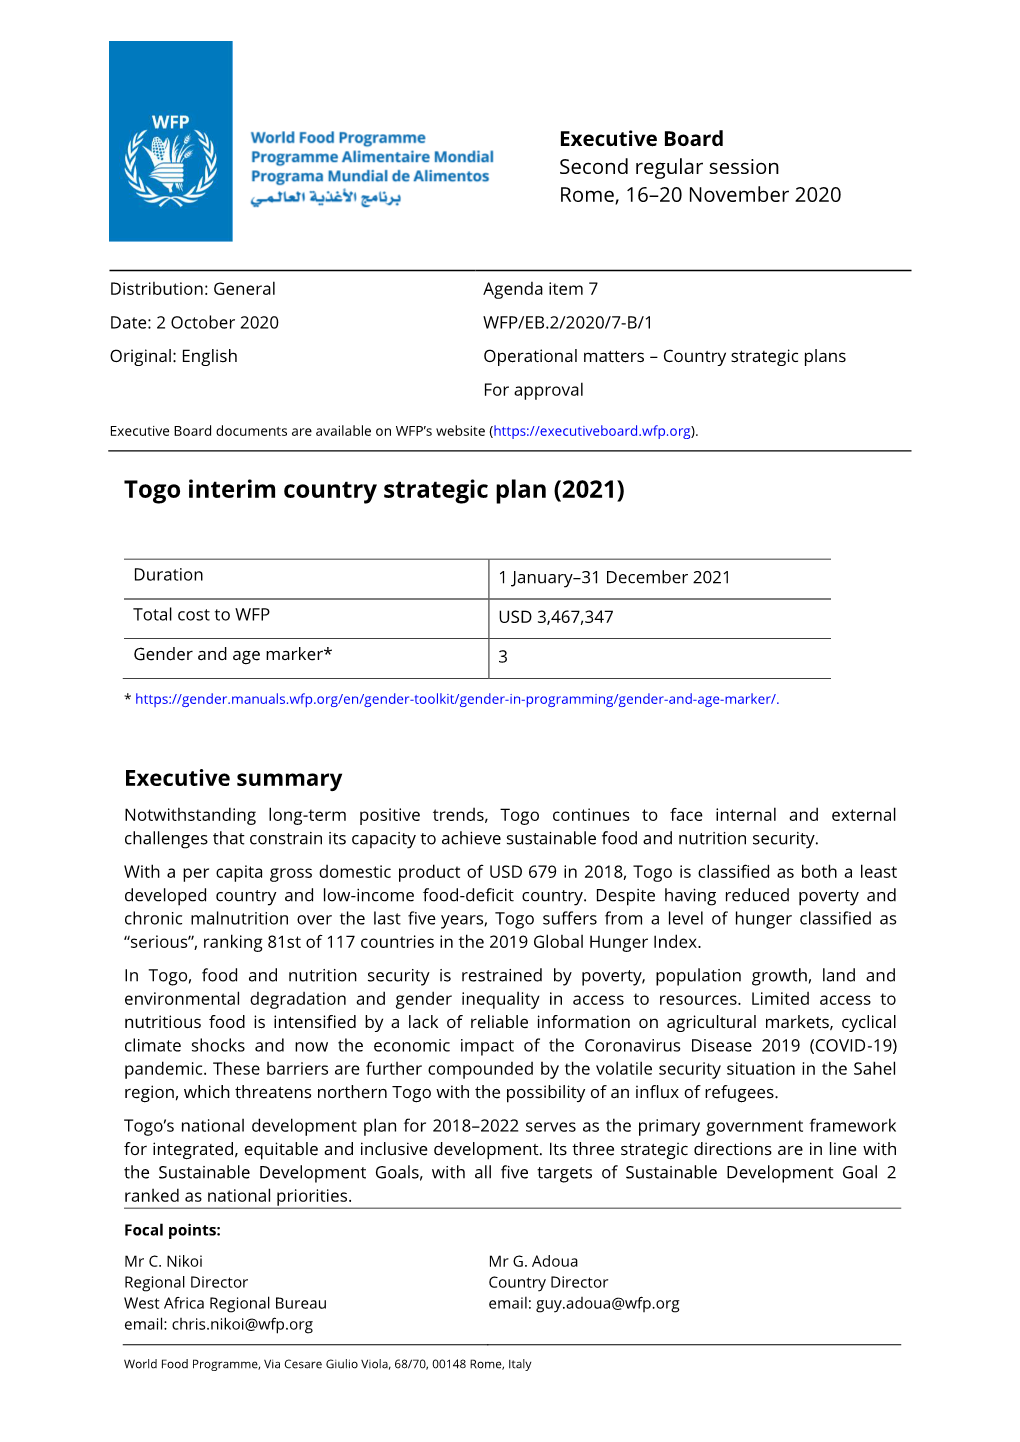 Togo Interim Country Strategic Plan (2021)